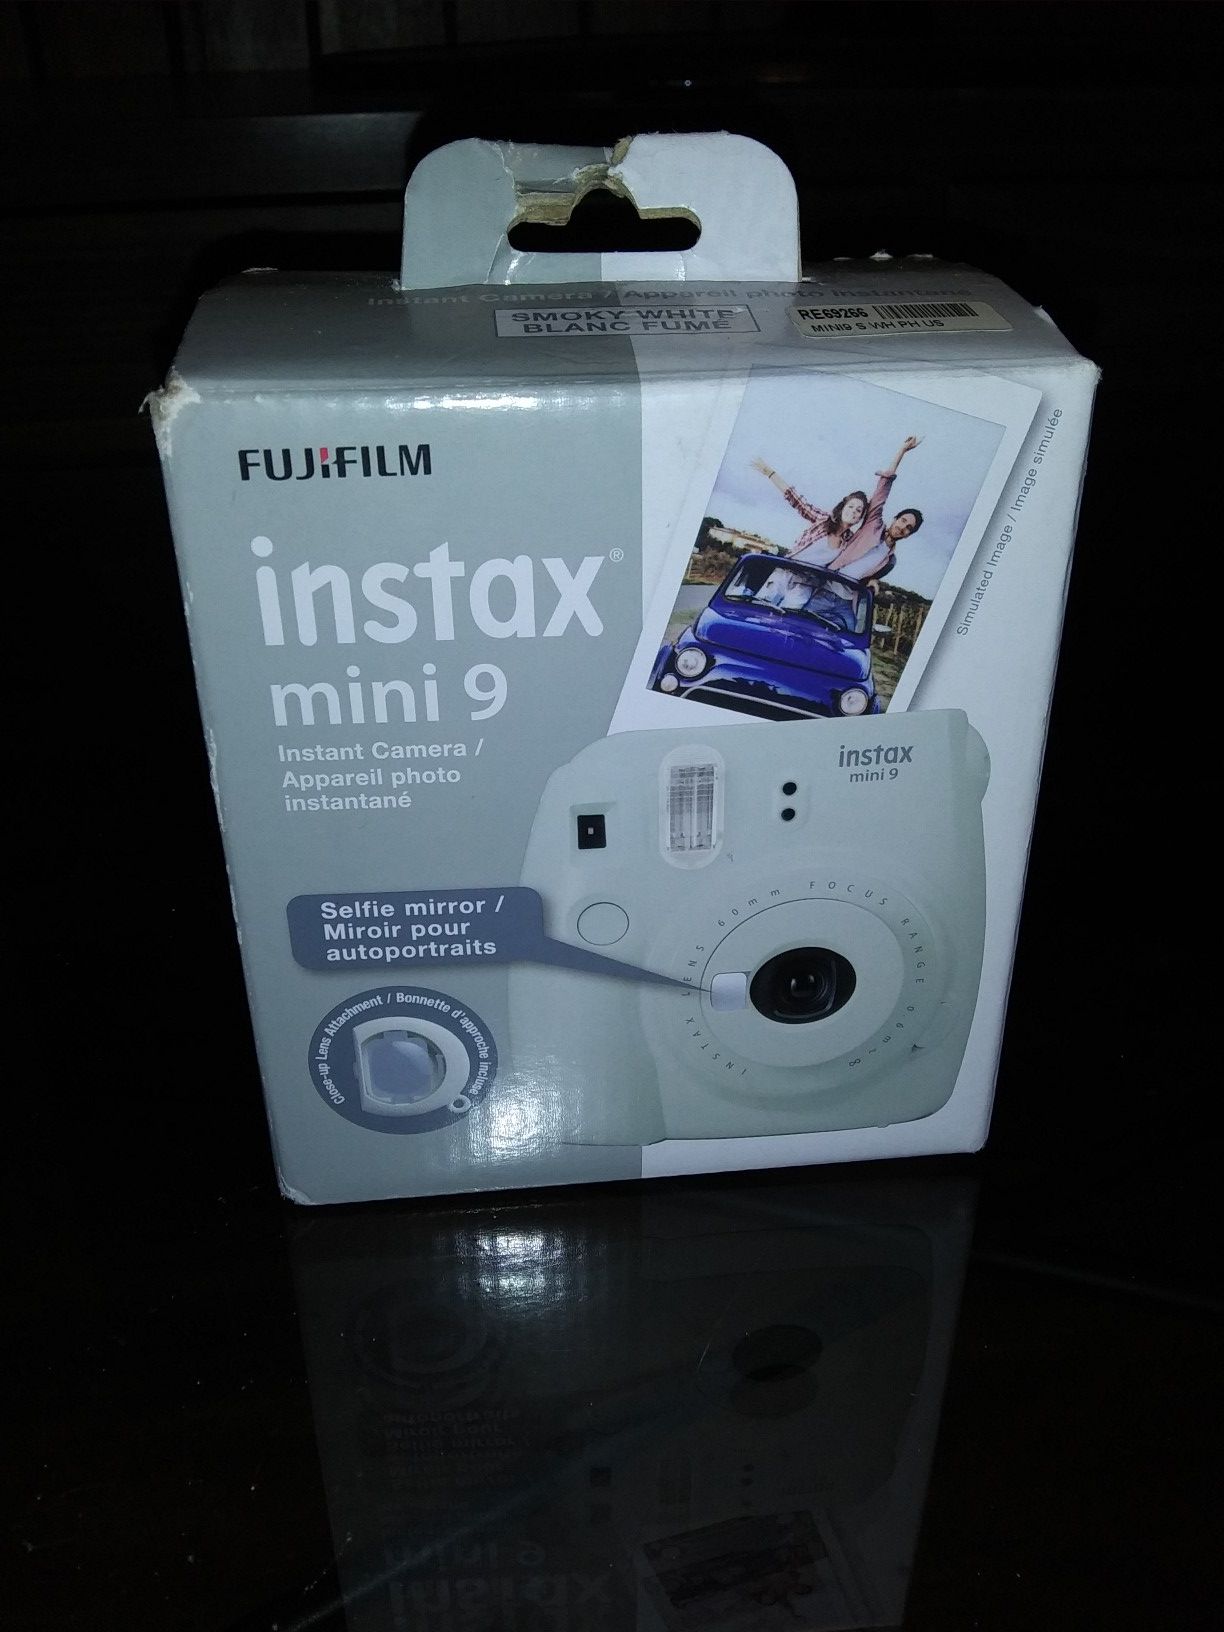 Fujifilm Instax Mini 9 Instant Film Digital Camera with Built In Printer Polaroid